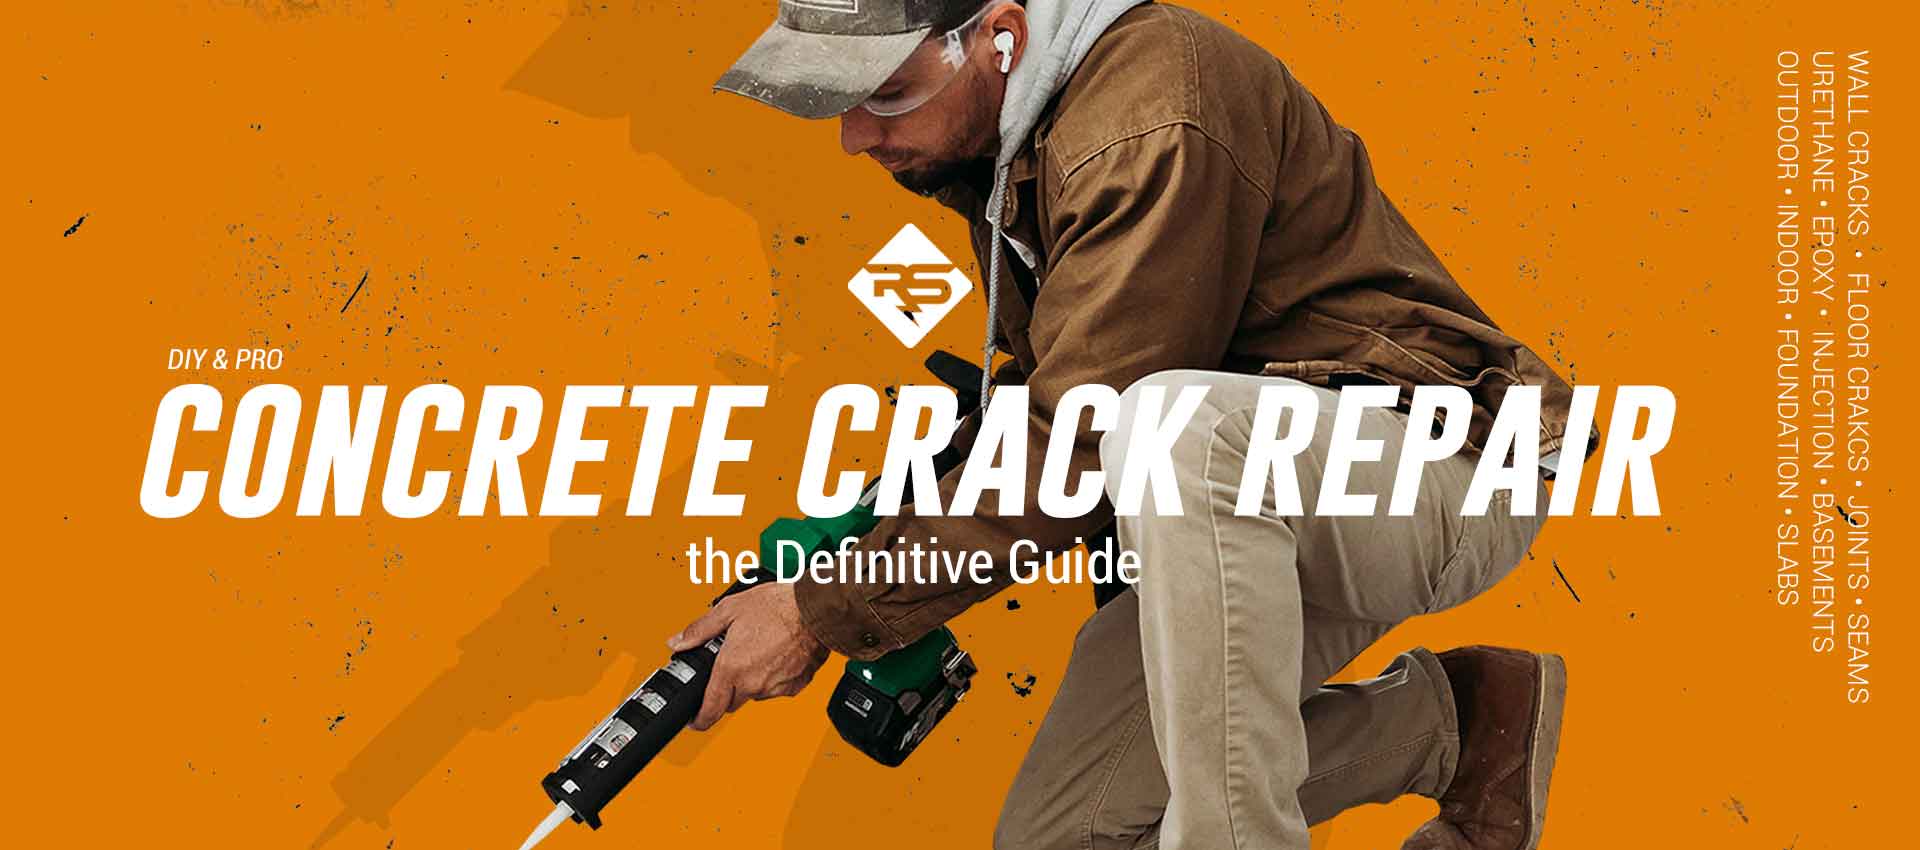 RadonSeal Concrete Crack Repair Guide